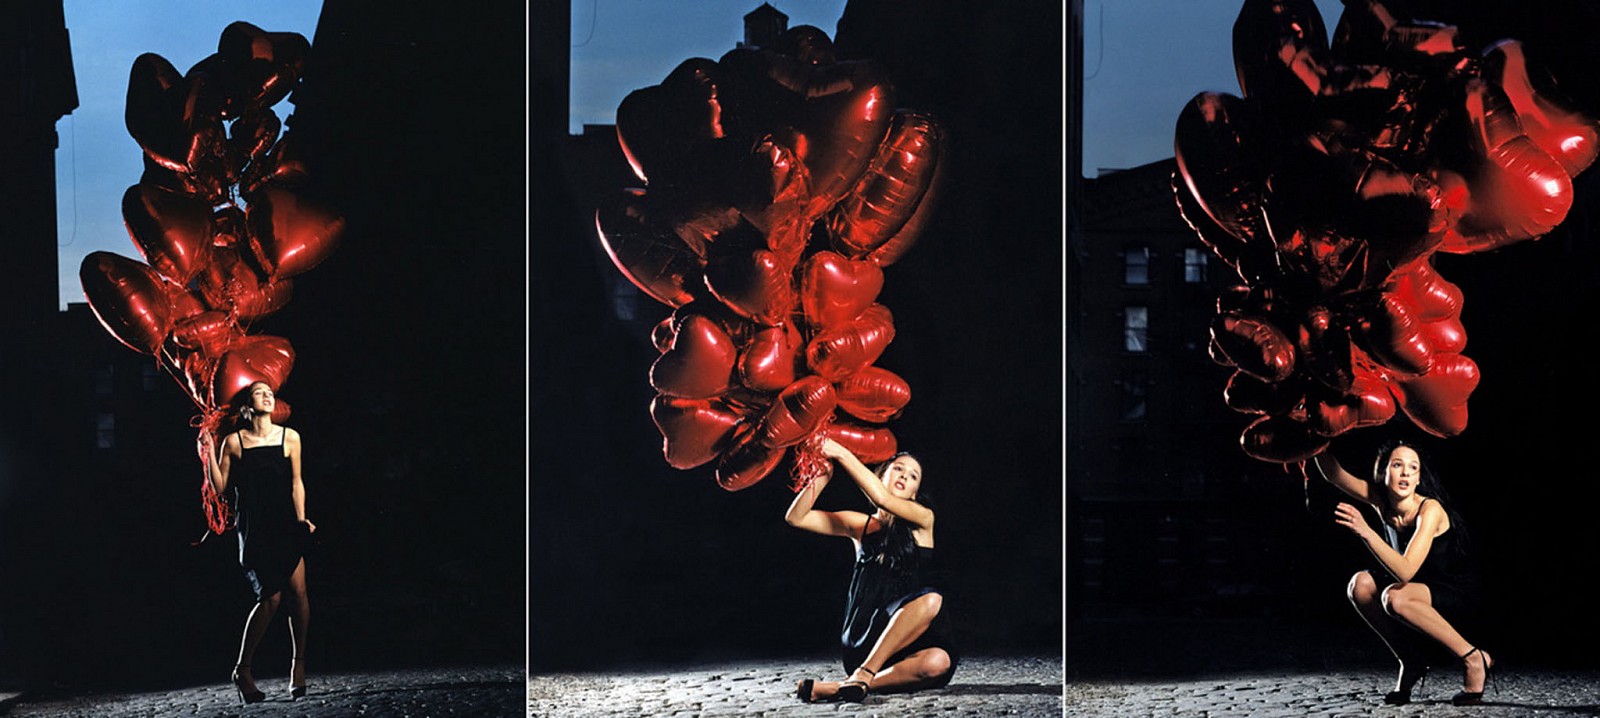 David Drebin, LoveLoveLove (Triptych), 2005
Digital C Print, 24 x 18 inches, 40 x 33.375 inches and 60 x 45 inches